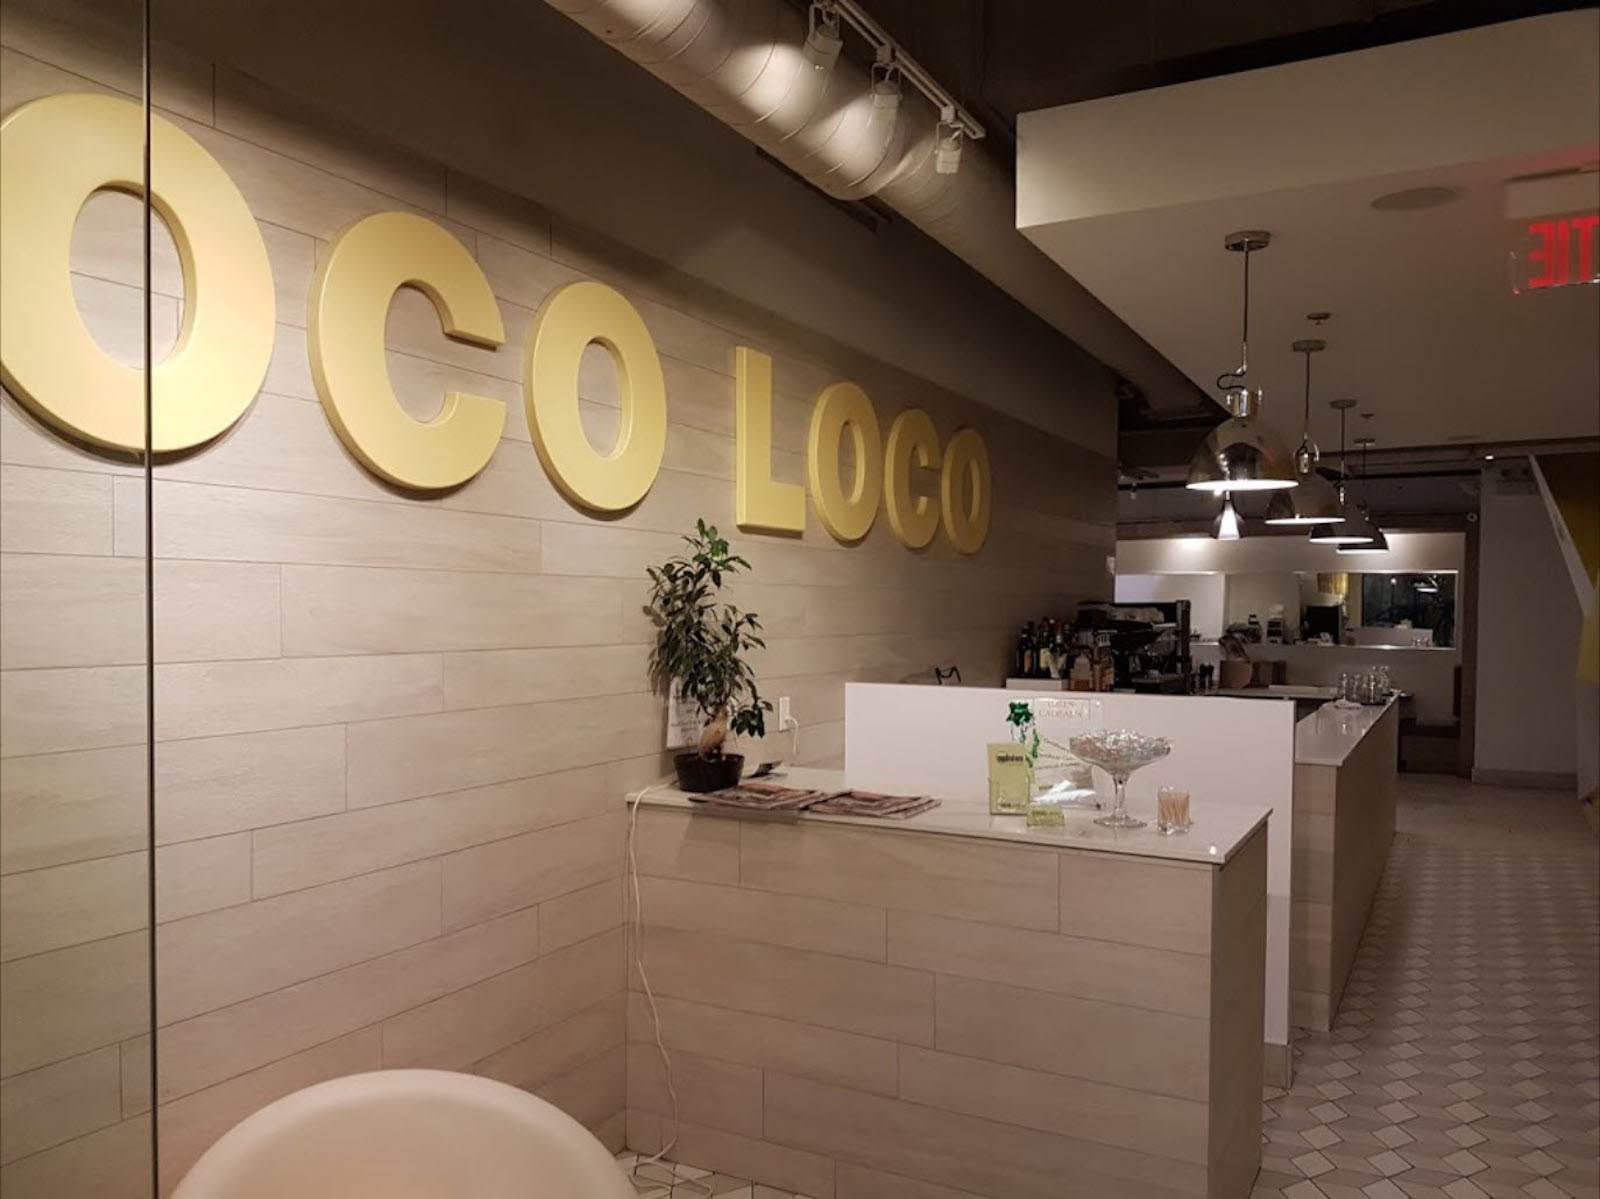 Restaurant Coco Loco